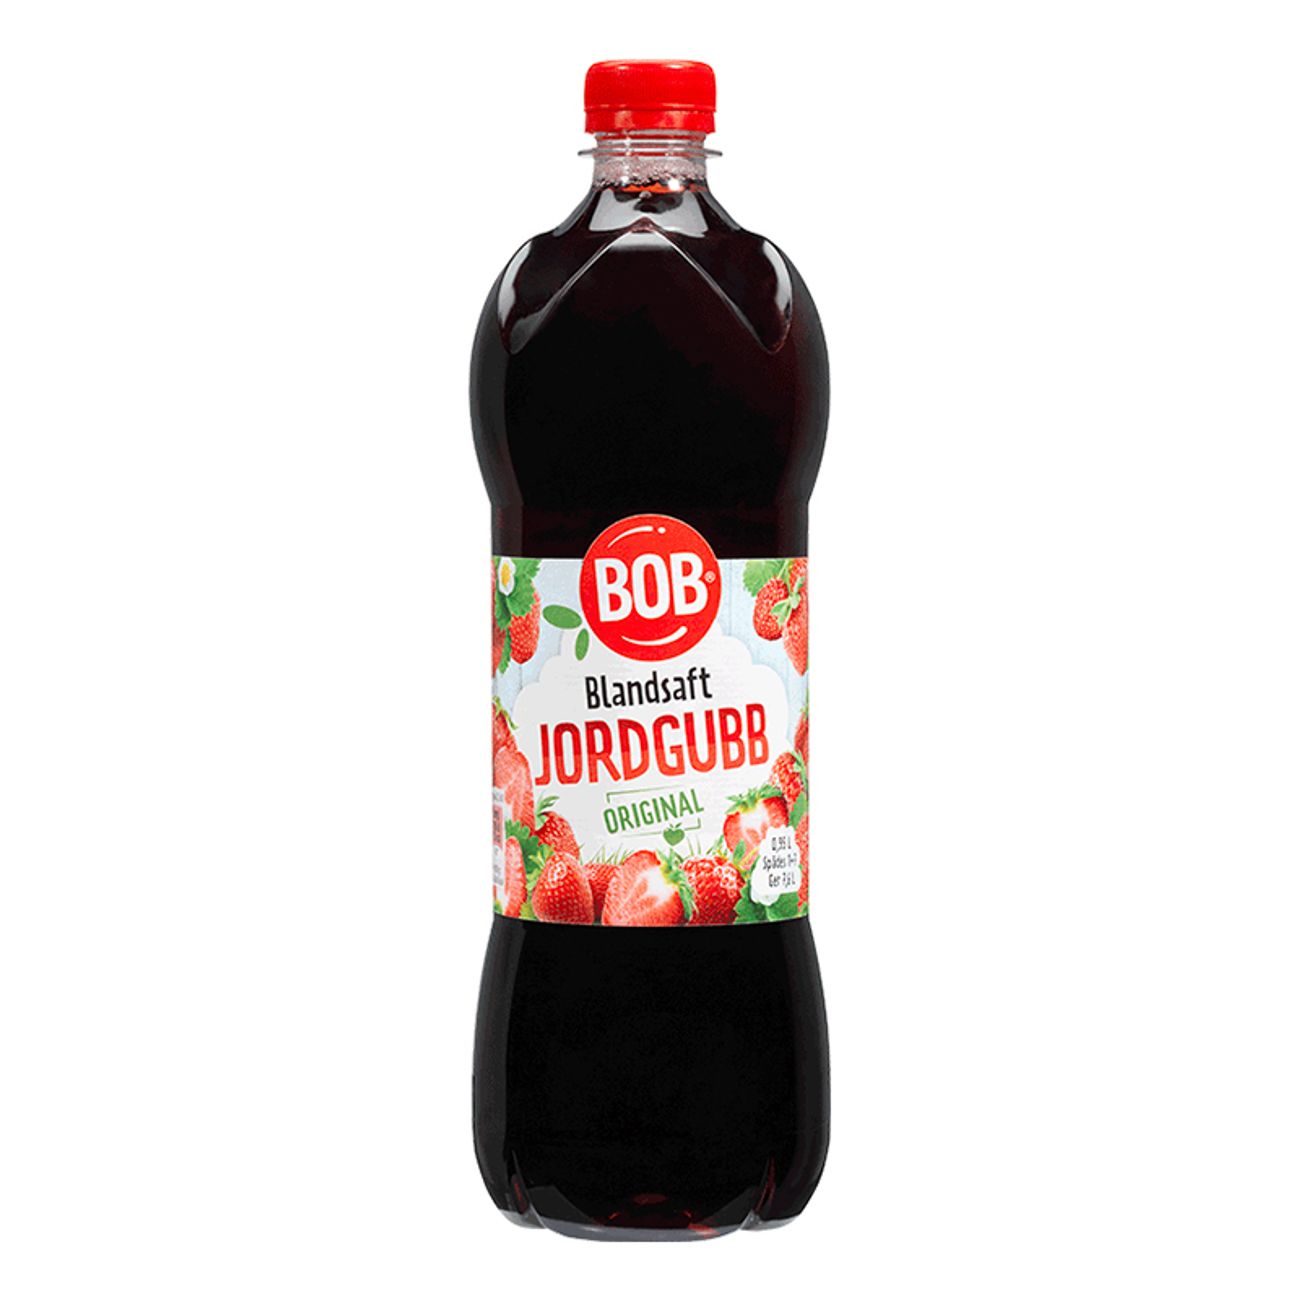 bob-blandsaft-jordgubb-78581-1